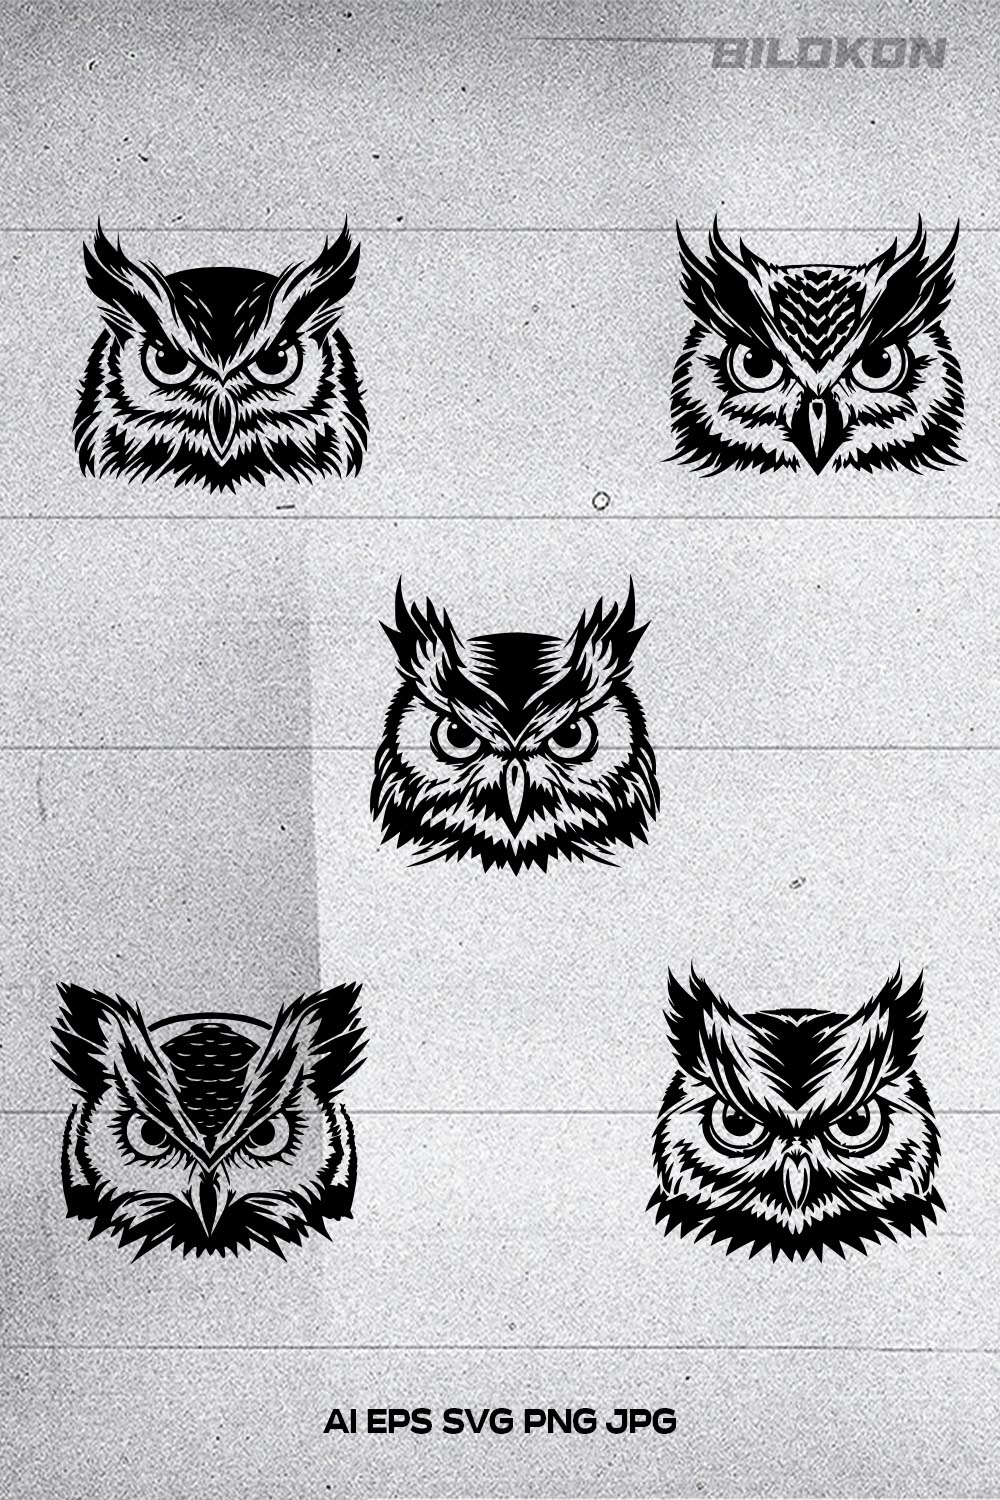 Owl head Vector illustration, SVG BUNDLE pinterest preview image.